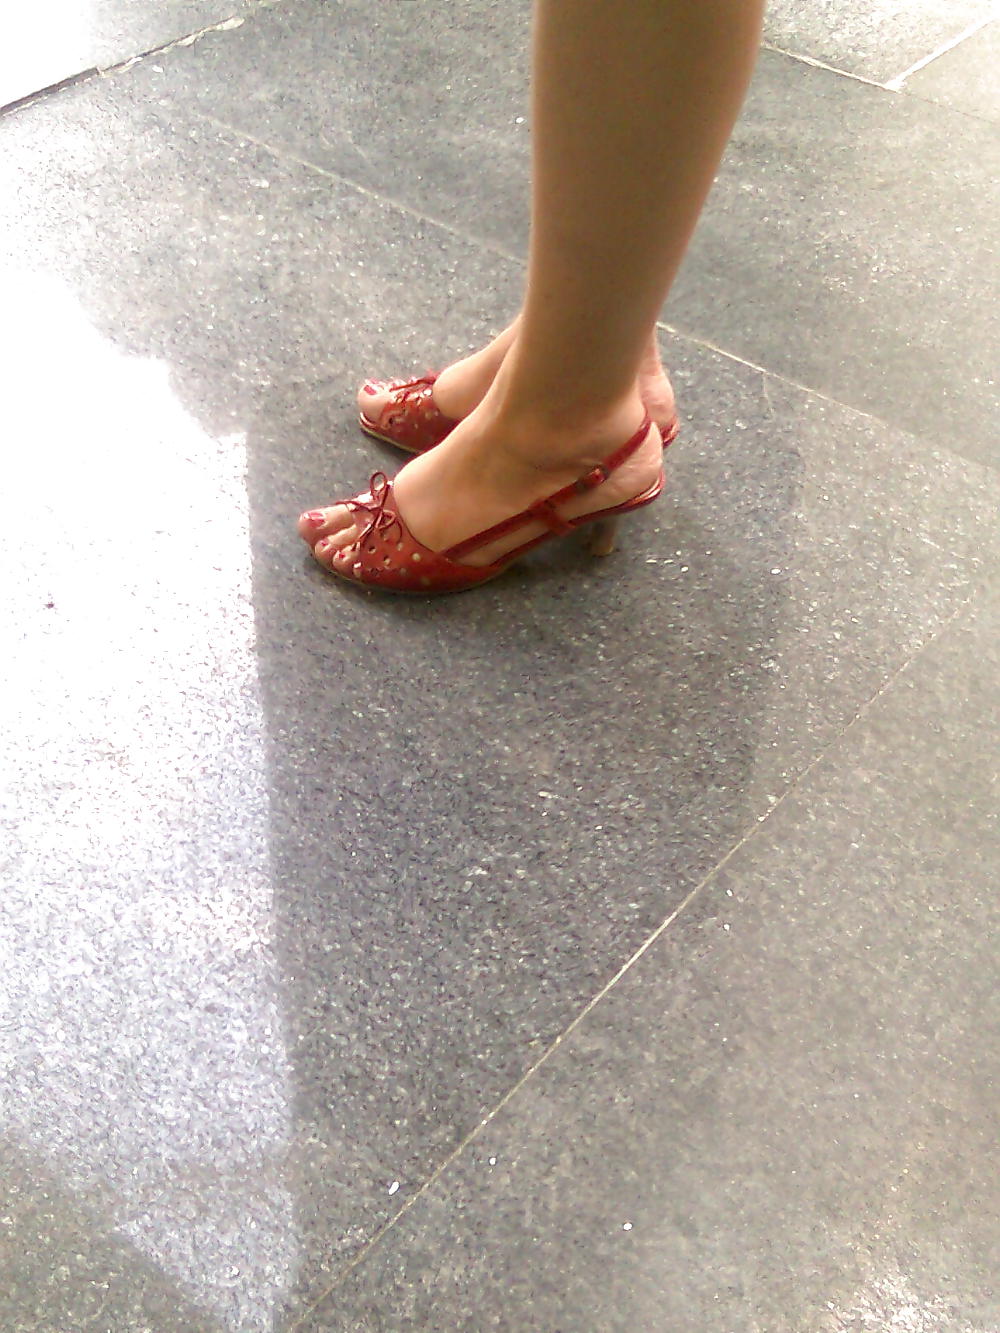 Candid feet red polished toenails #13979797